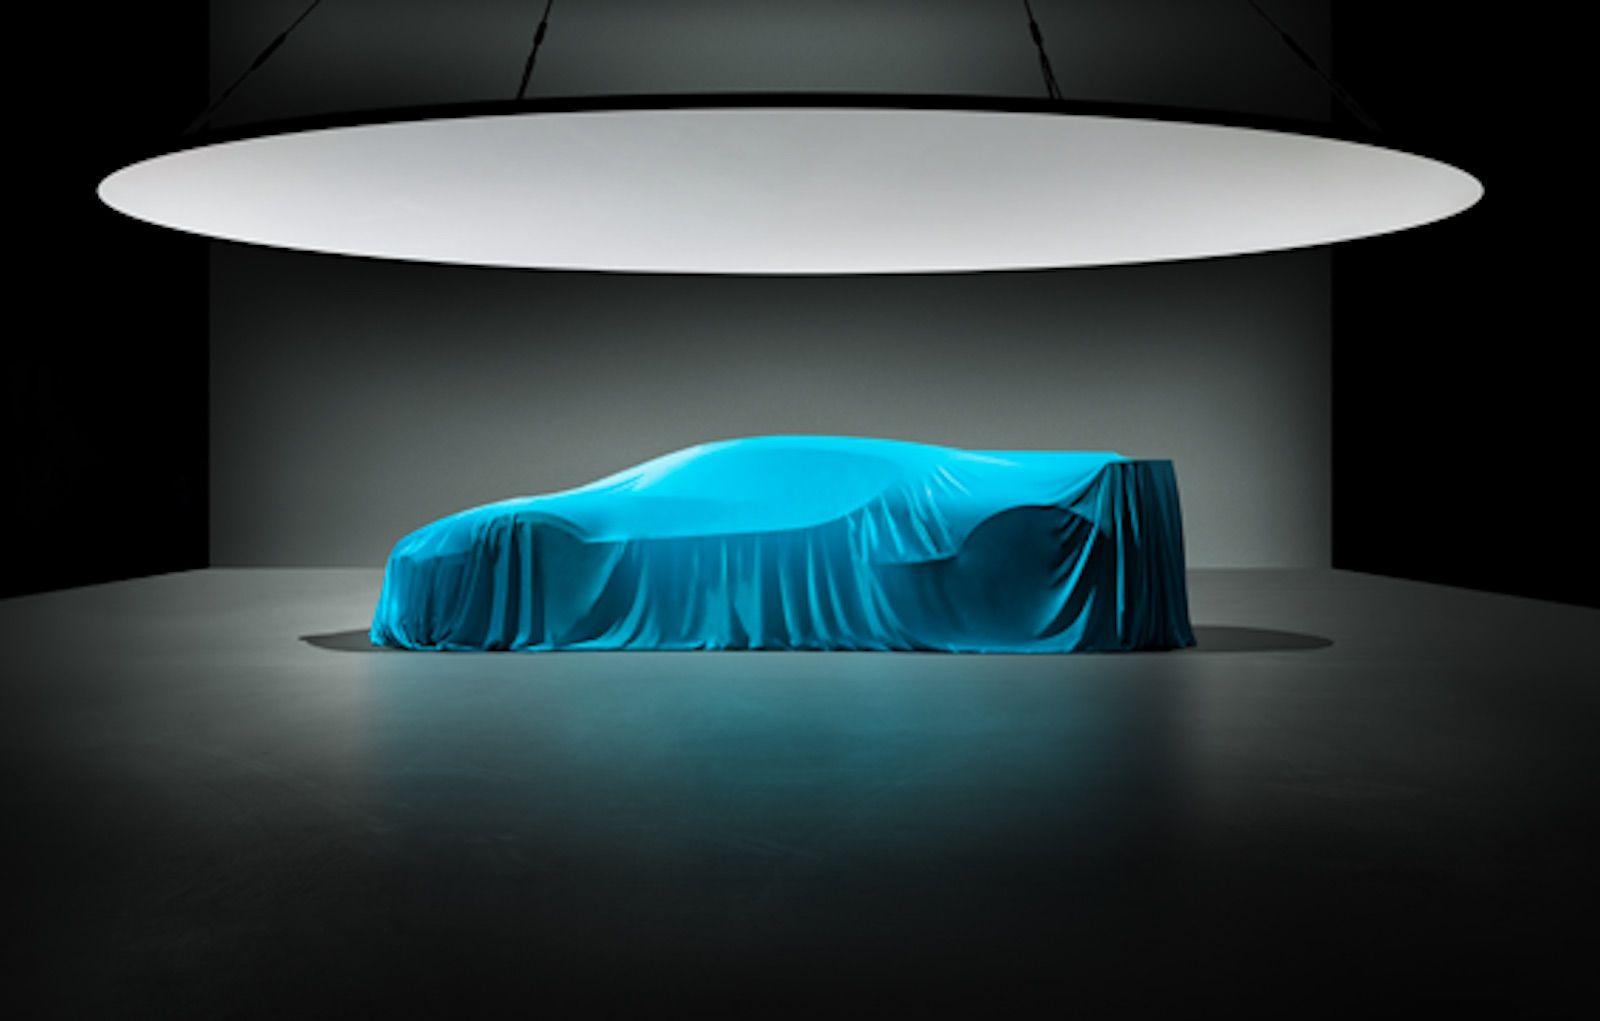 Bugatti Divo Coming With Race Inspired Aerodynamics AutoGuide.com News